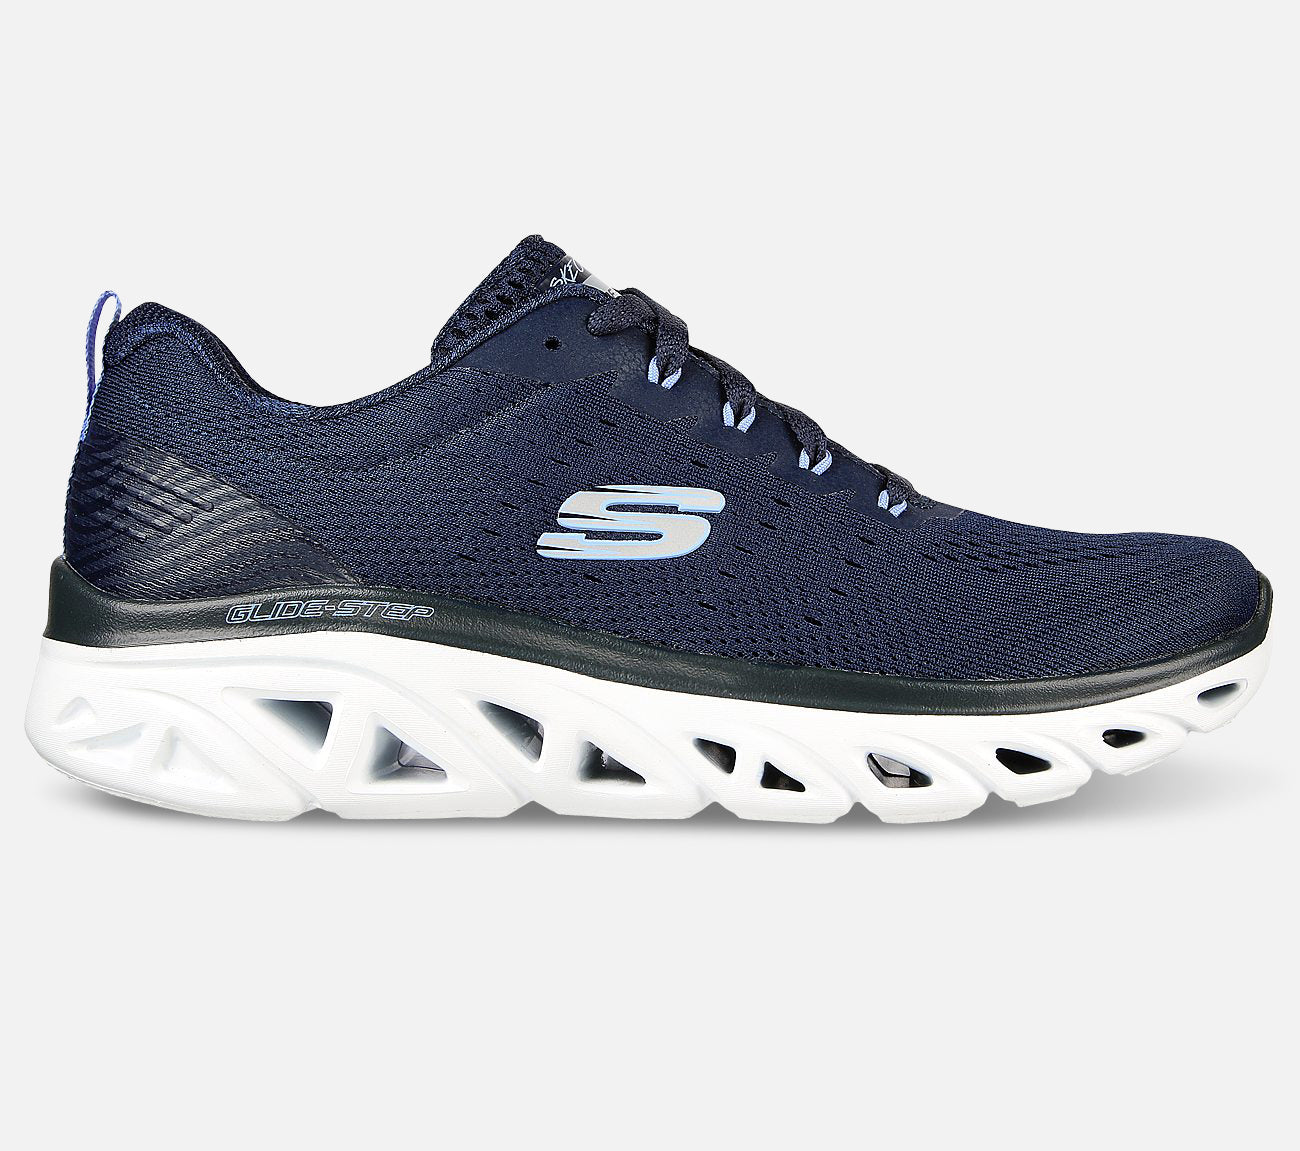 Glide-Step Sport- New Facets Shoe Skechers